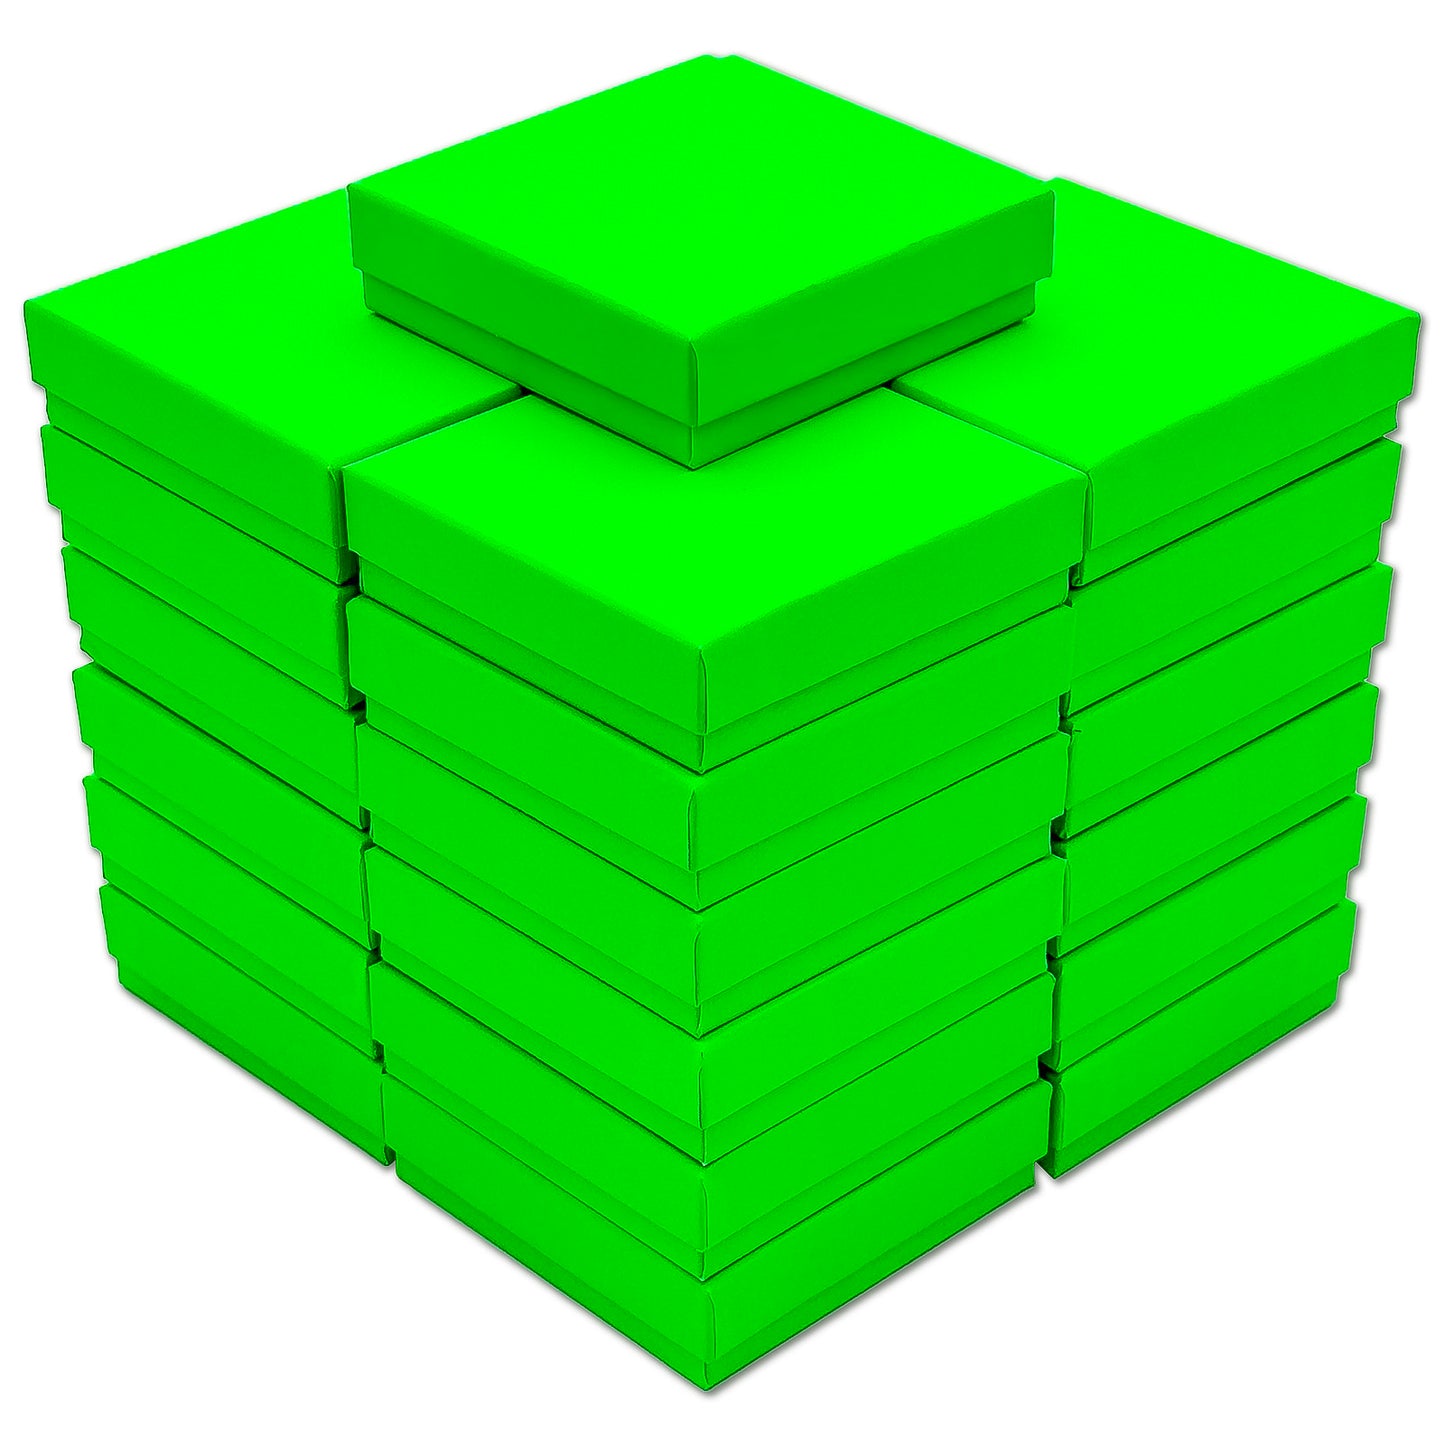 3 1/2" x 3 1/2" x 1" Neon Green Cotton Filled Paper Box